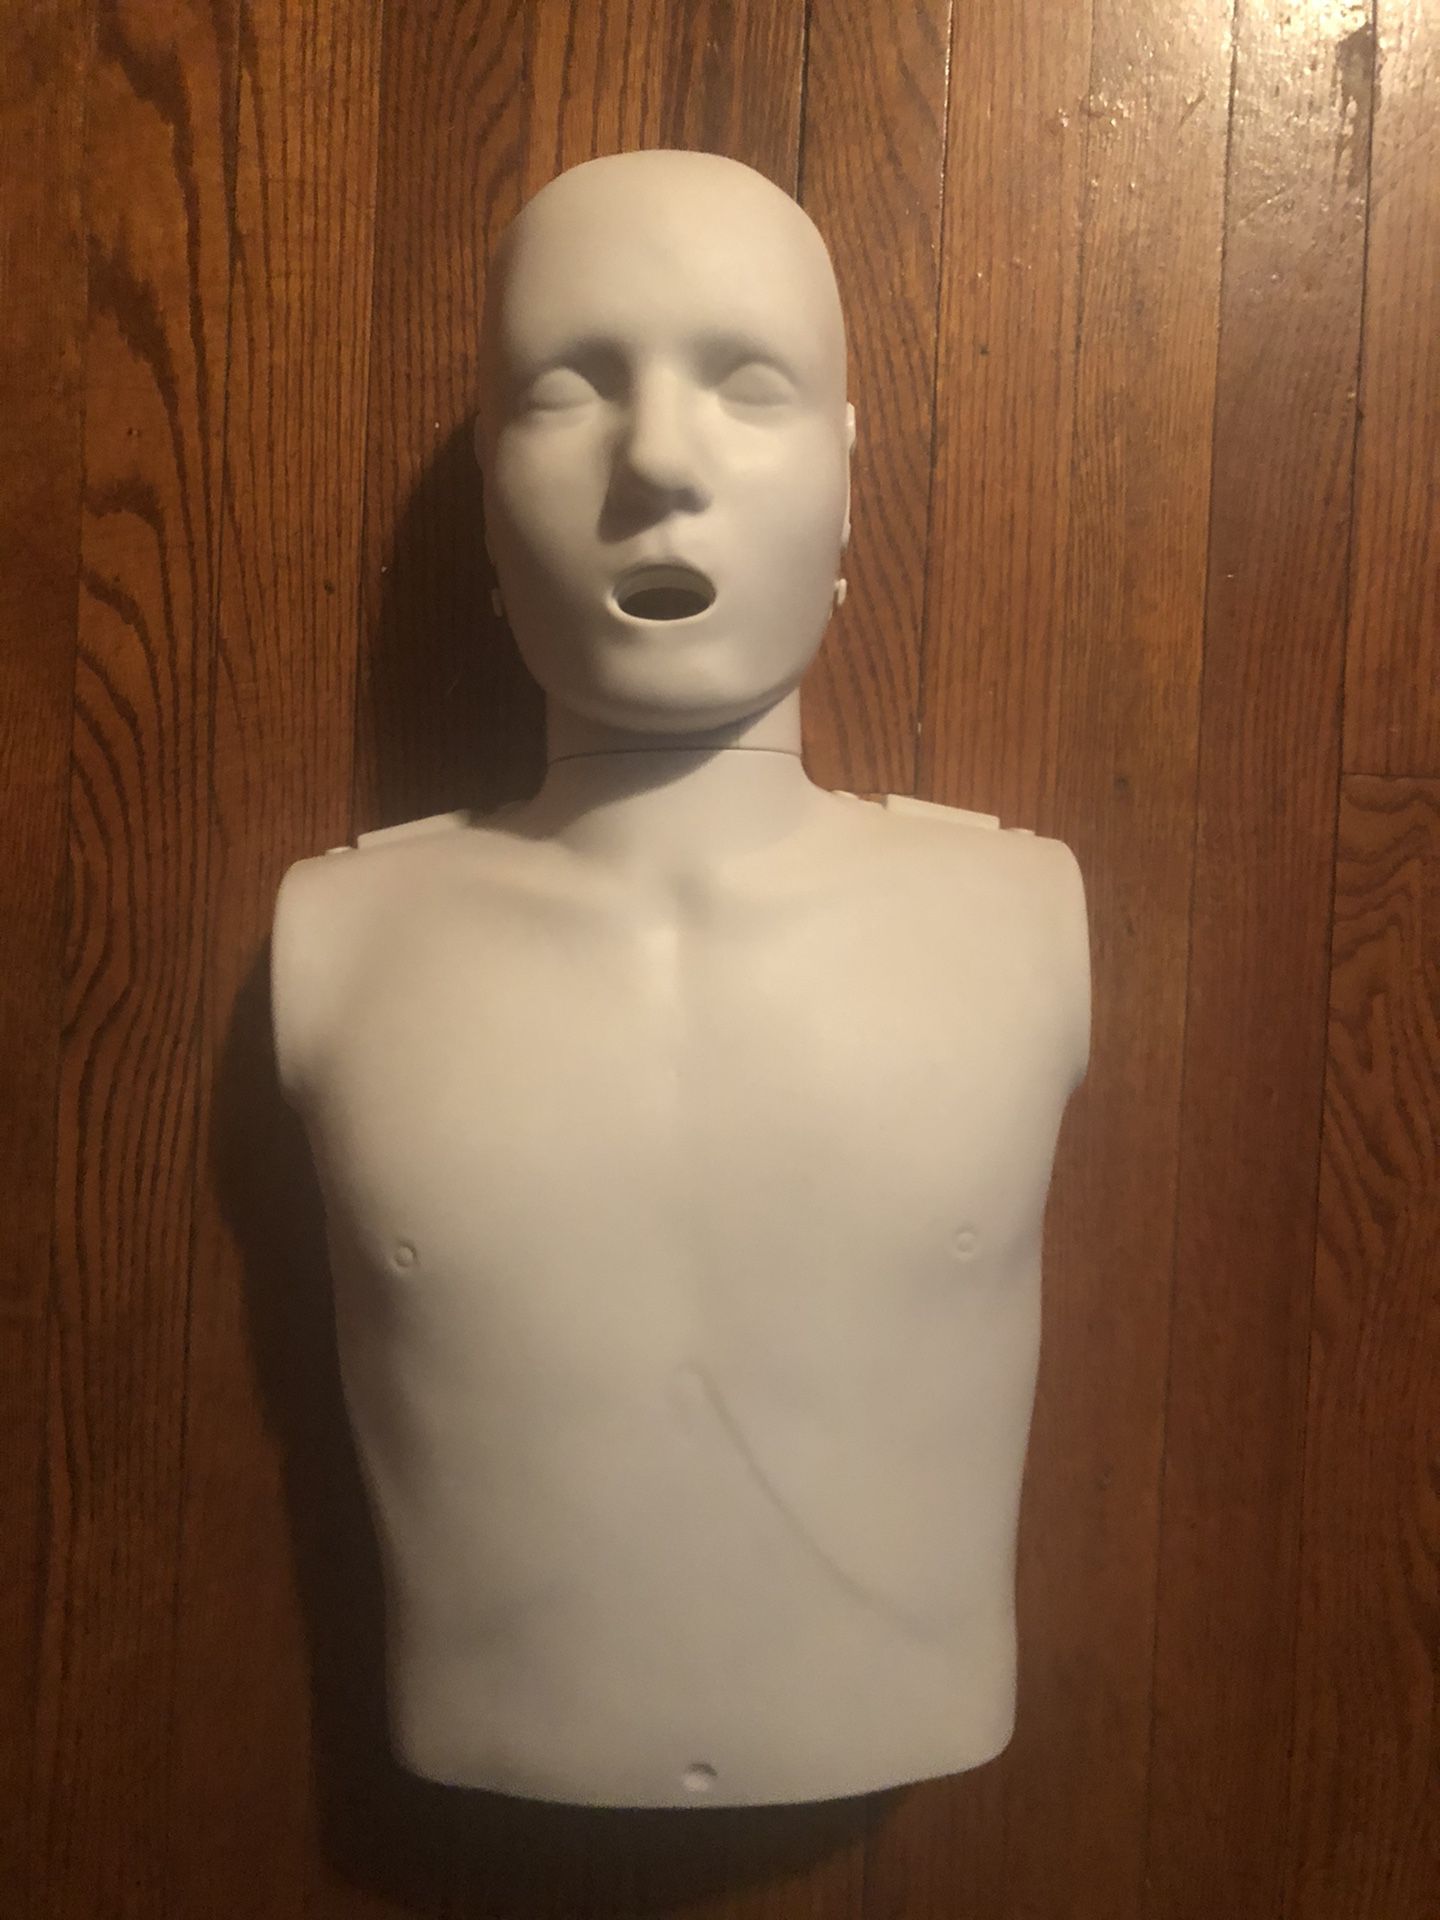 3 Simulaids CPR manikin mannequin torso female